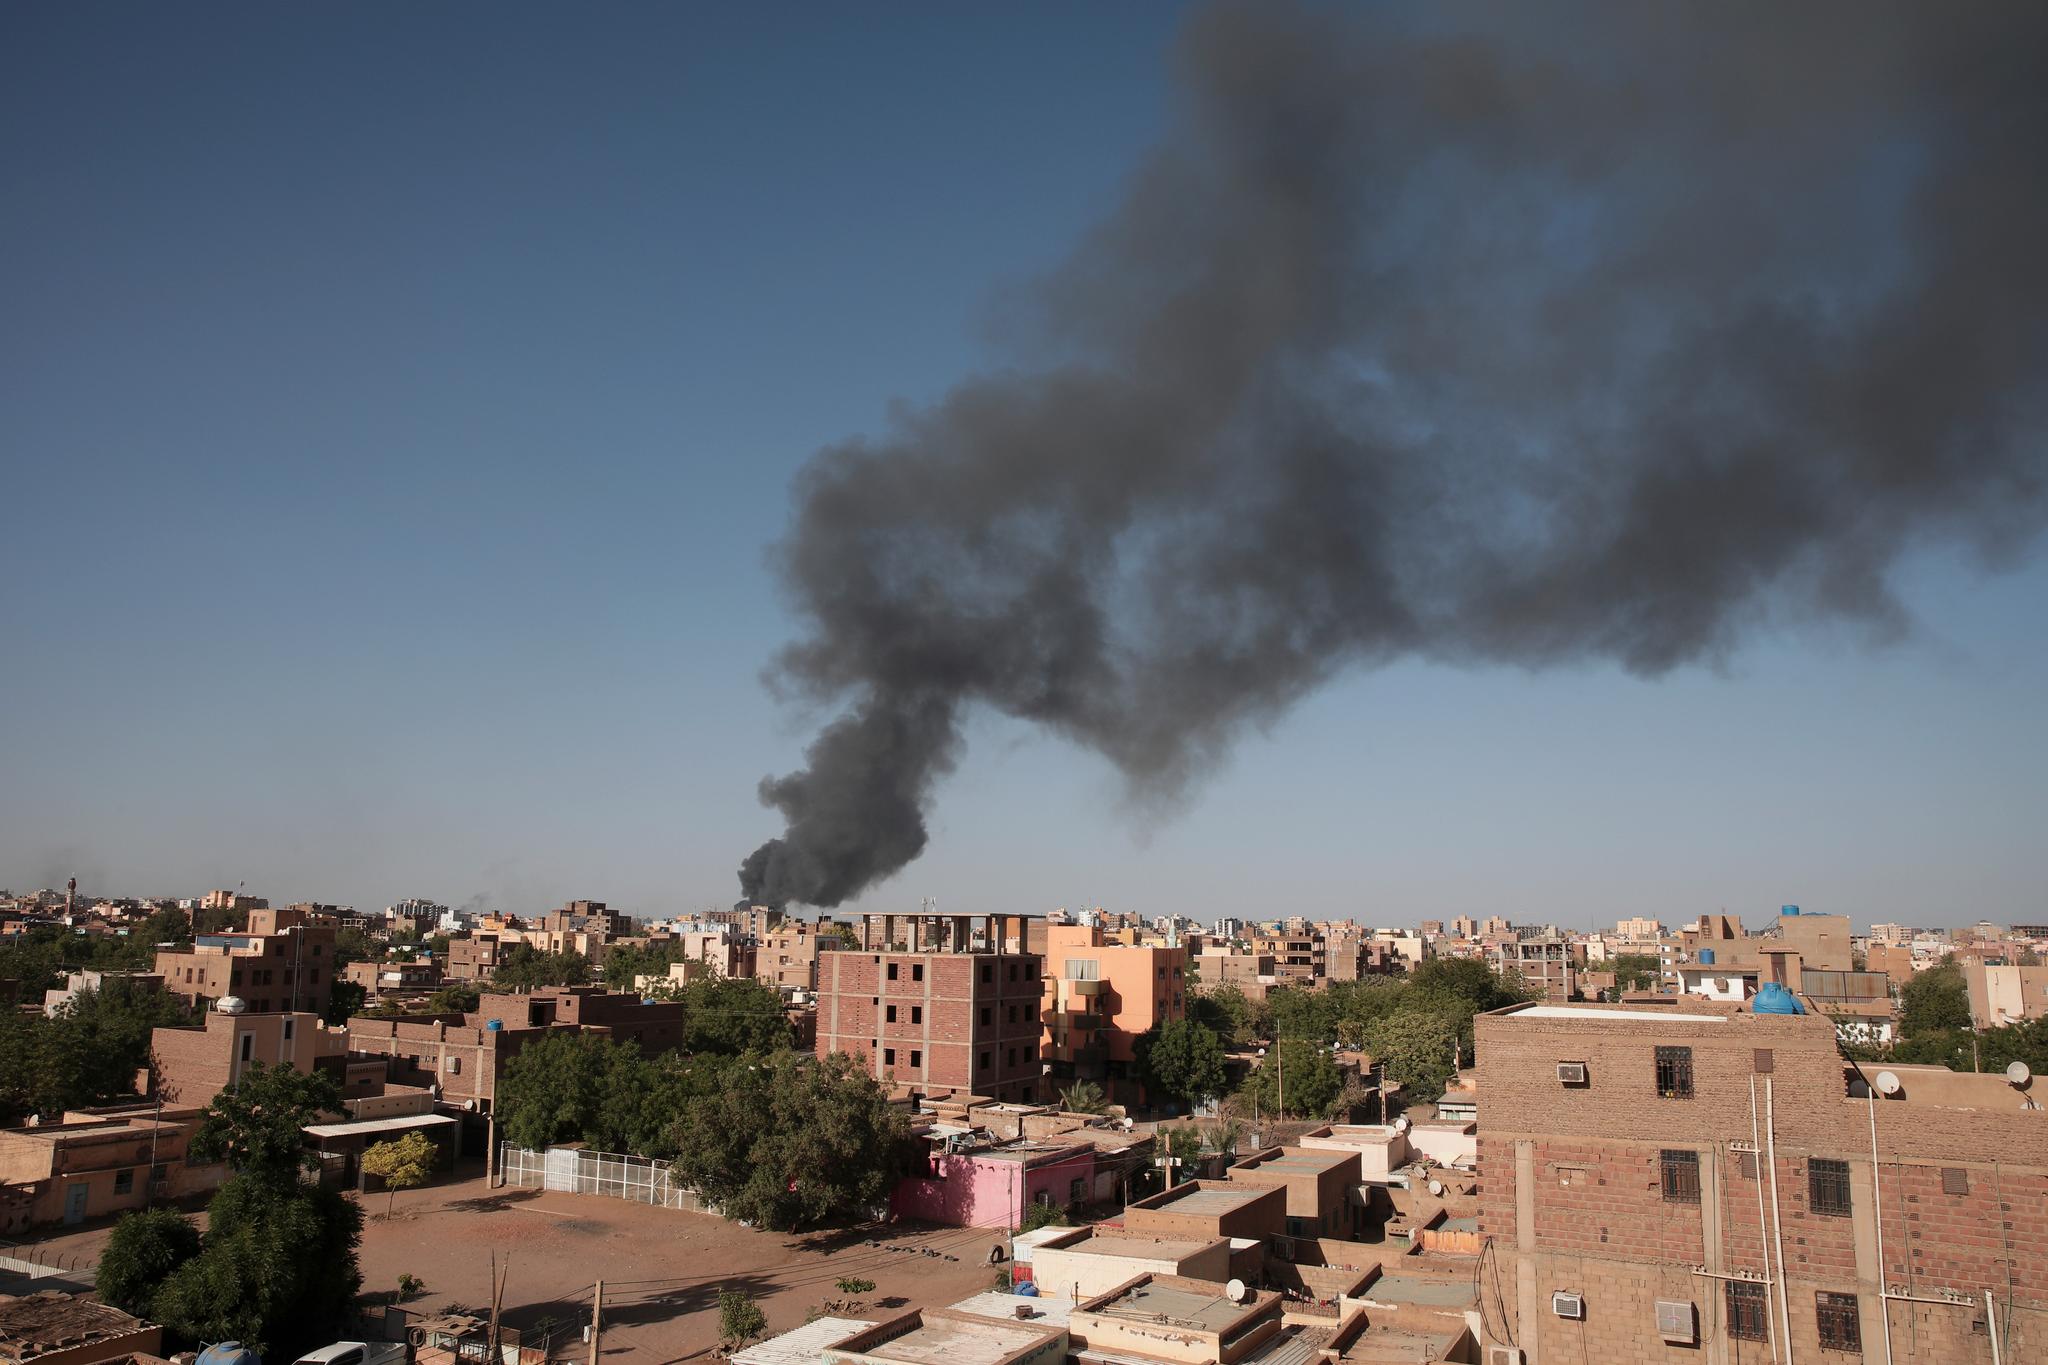 Røyk stiger til værs i Khartoum der det har vært voldsomme kamper. Søndag opplyser RSF-militsen at våpenhvilen fra torsdag forlenges i tre dager til. 